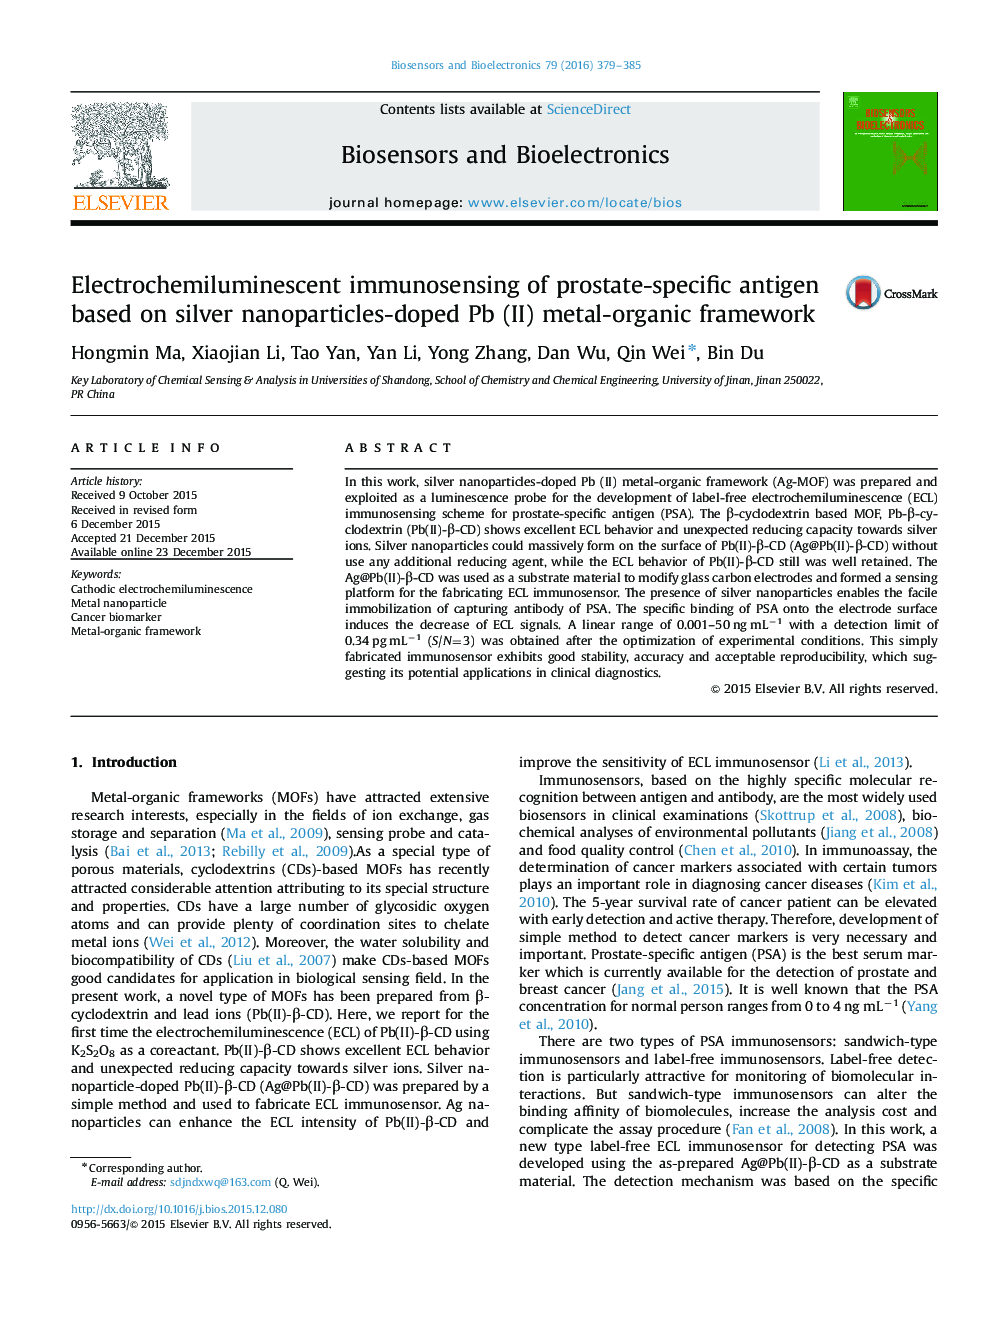 Electrochemiluminescent immunosensing of prostate-specific antigen based on silver nanoparticles-doped Pb (II) metal-organic framework